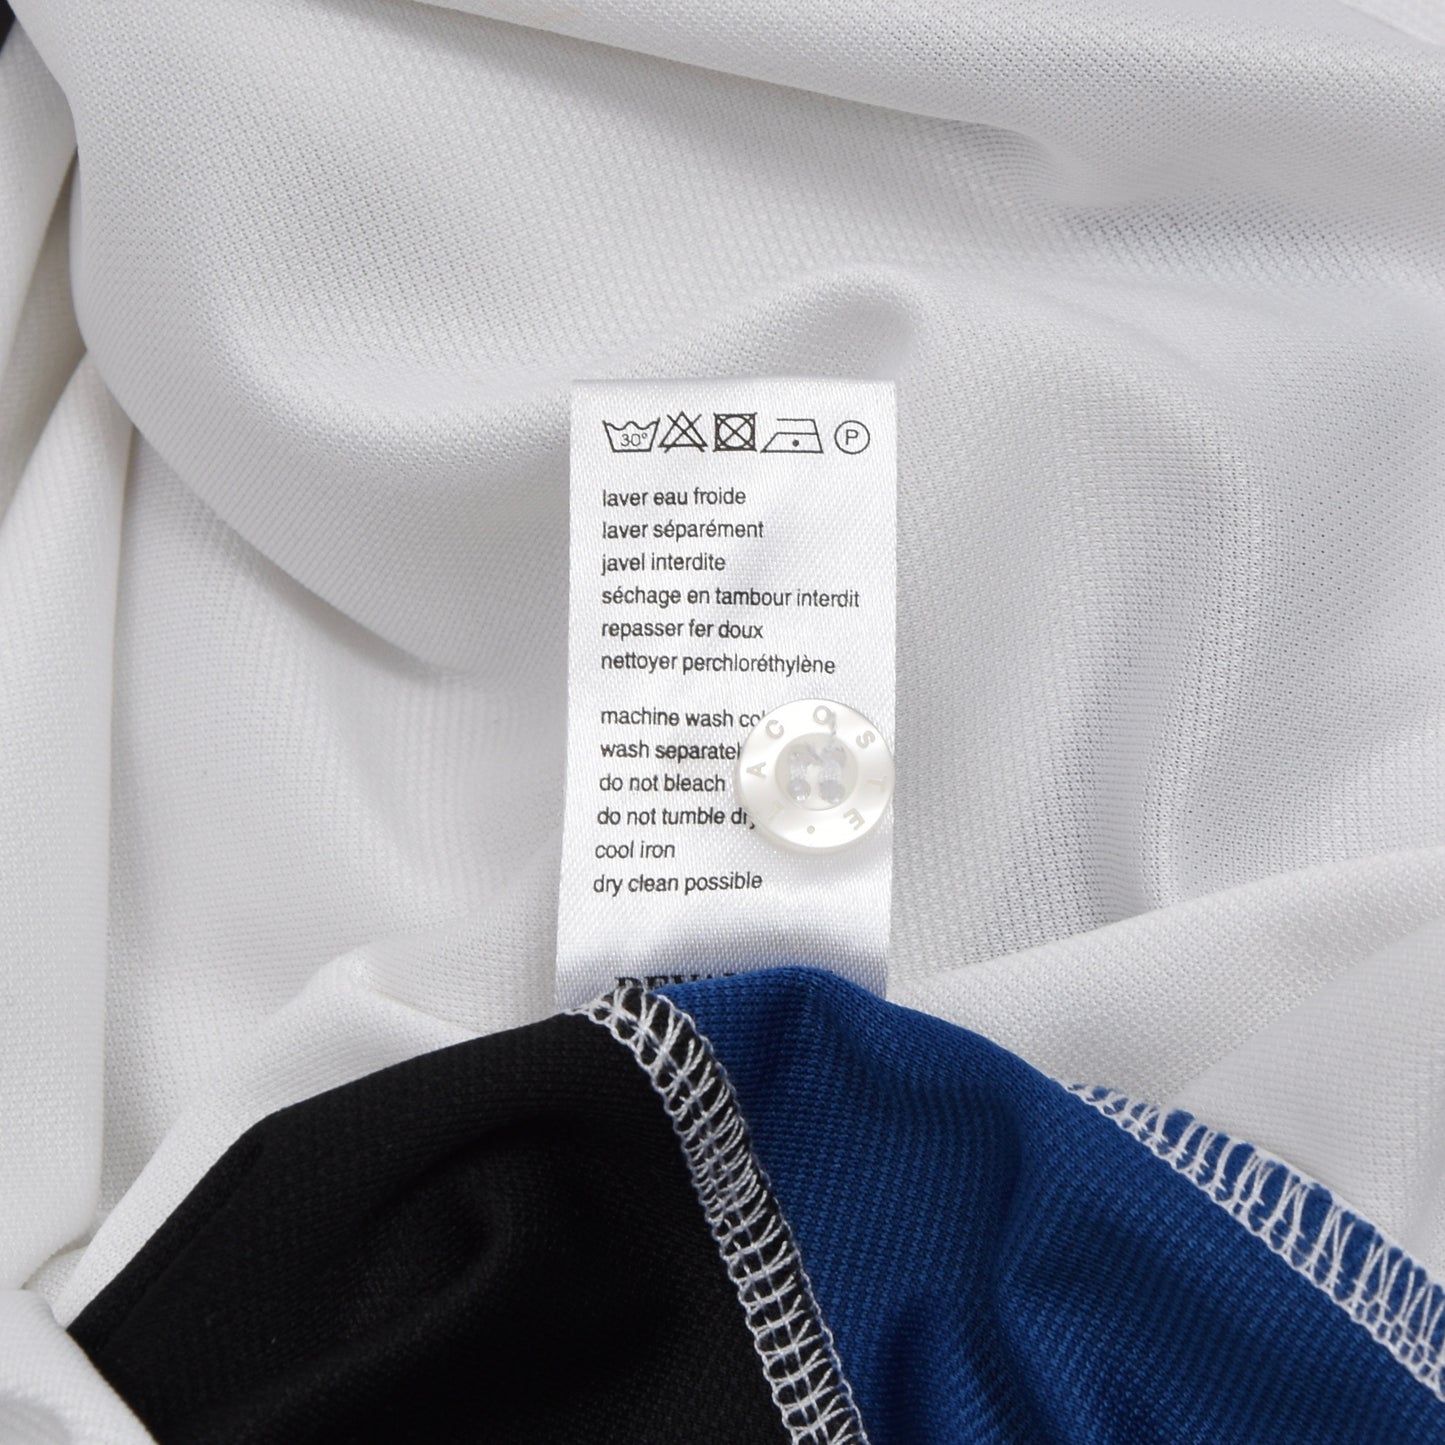 Lacoste Sport Polo Shirt Size 3 - White